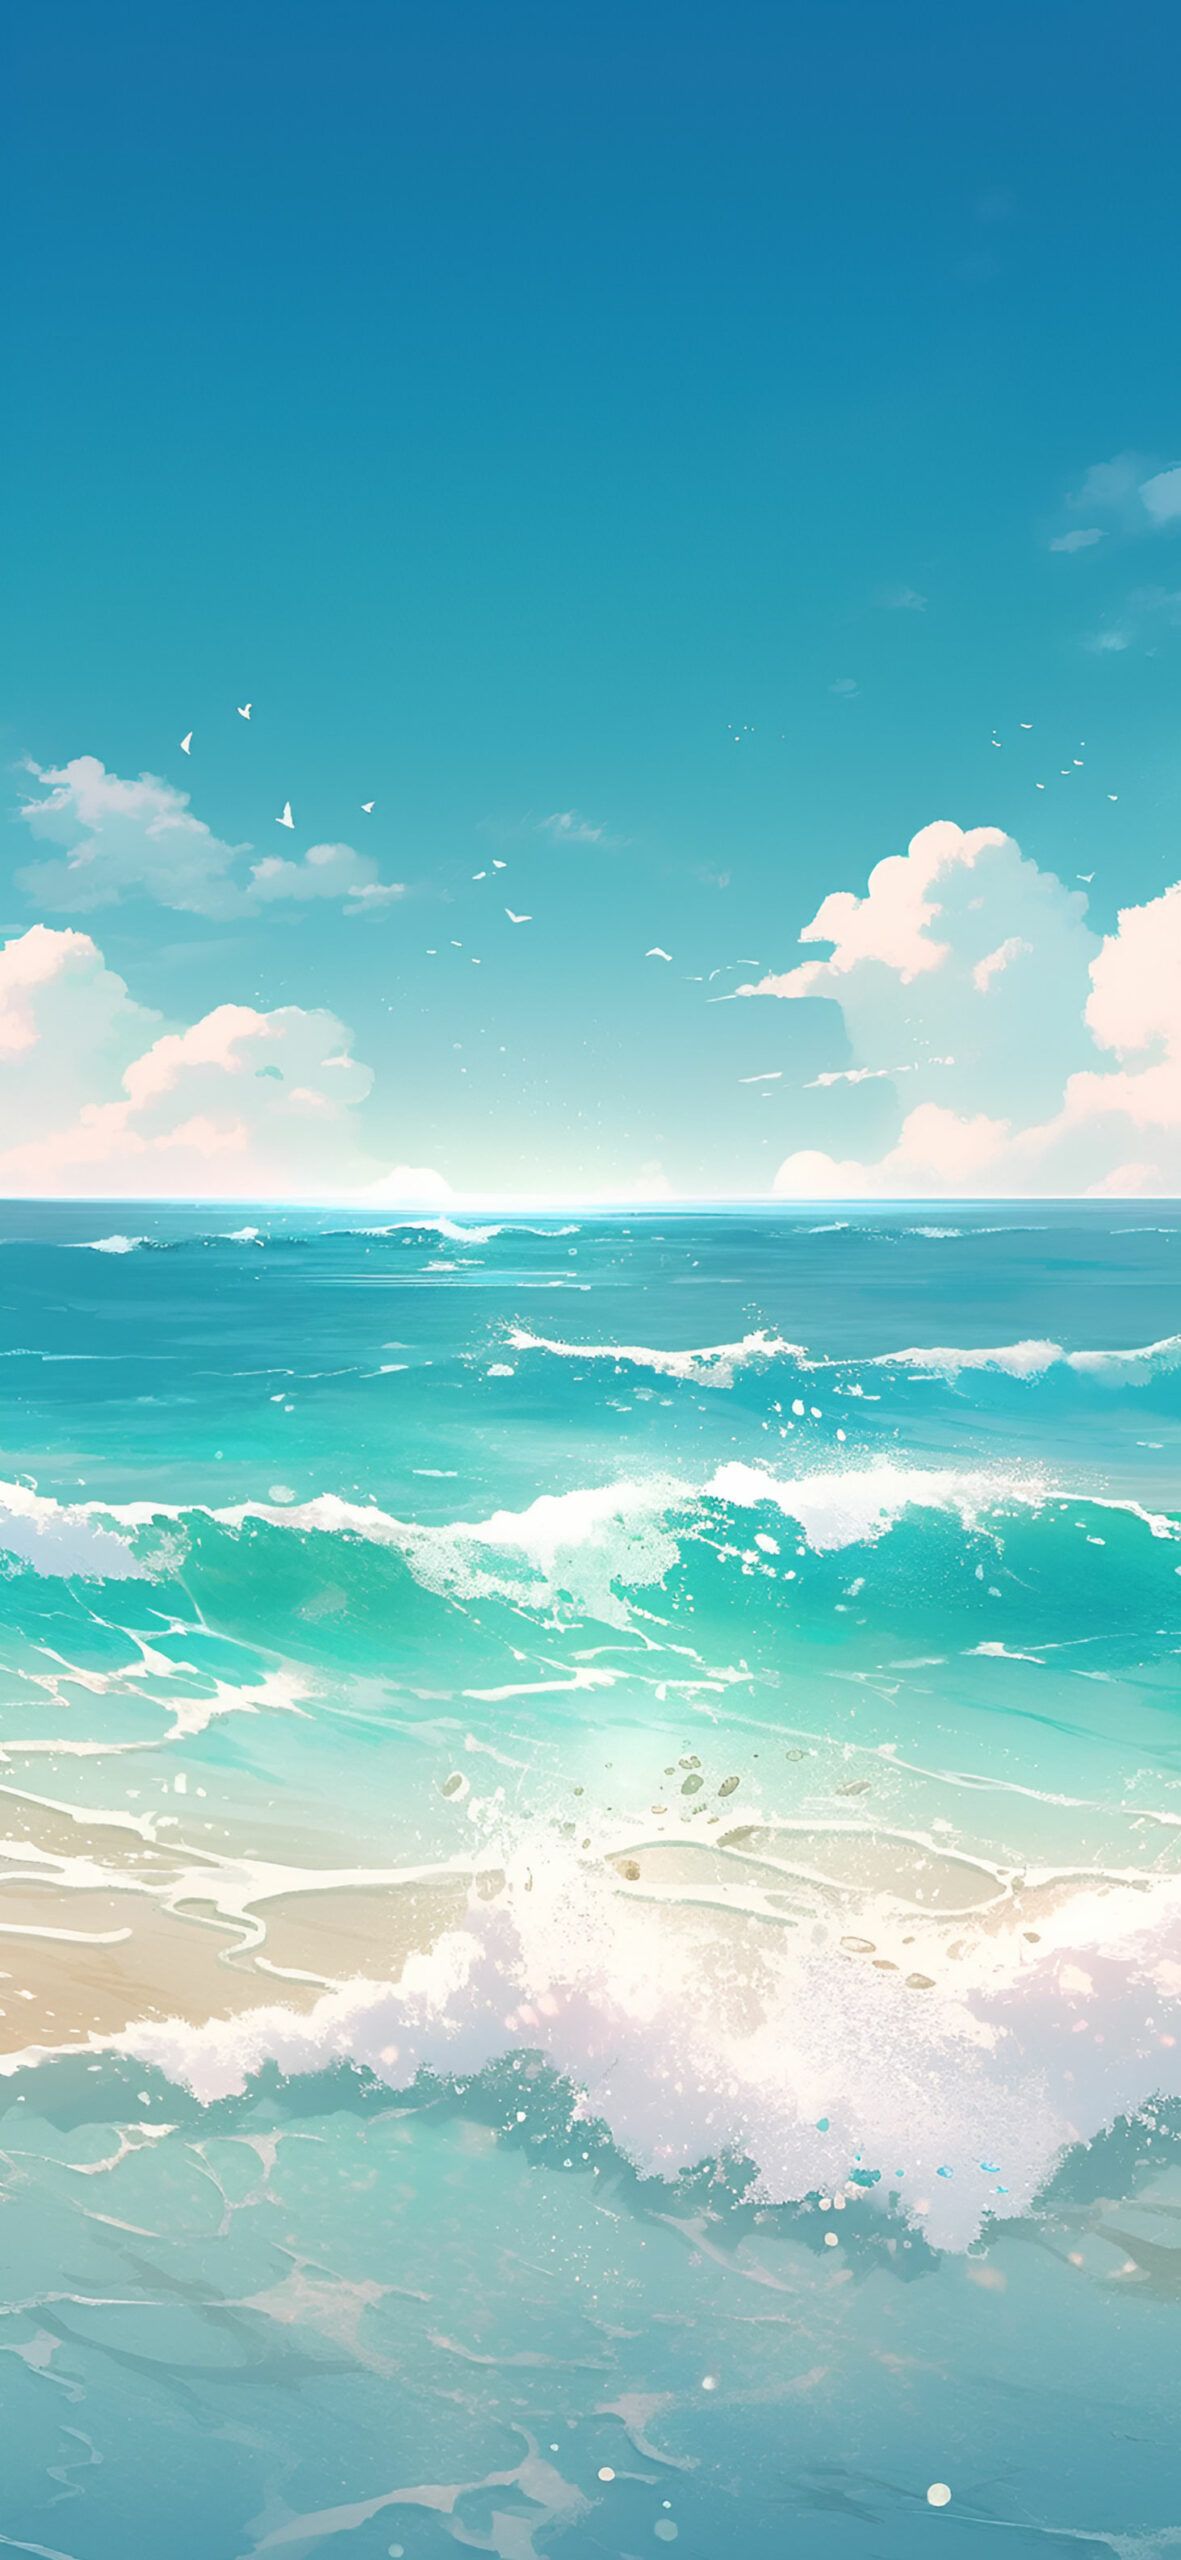 Aesthetic Turquoise Ocean & Clouds Wallpaper